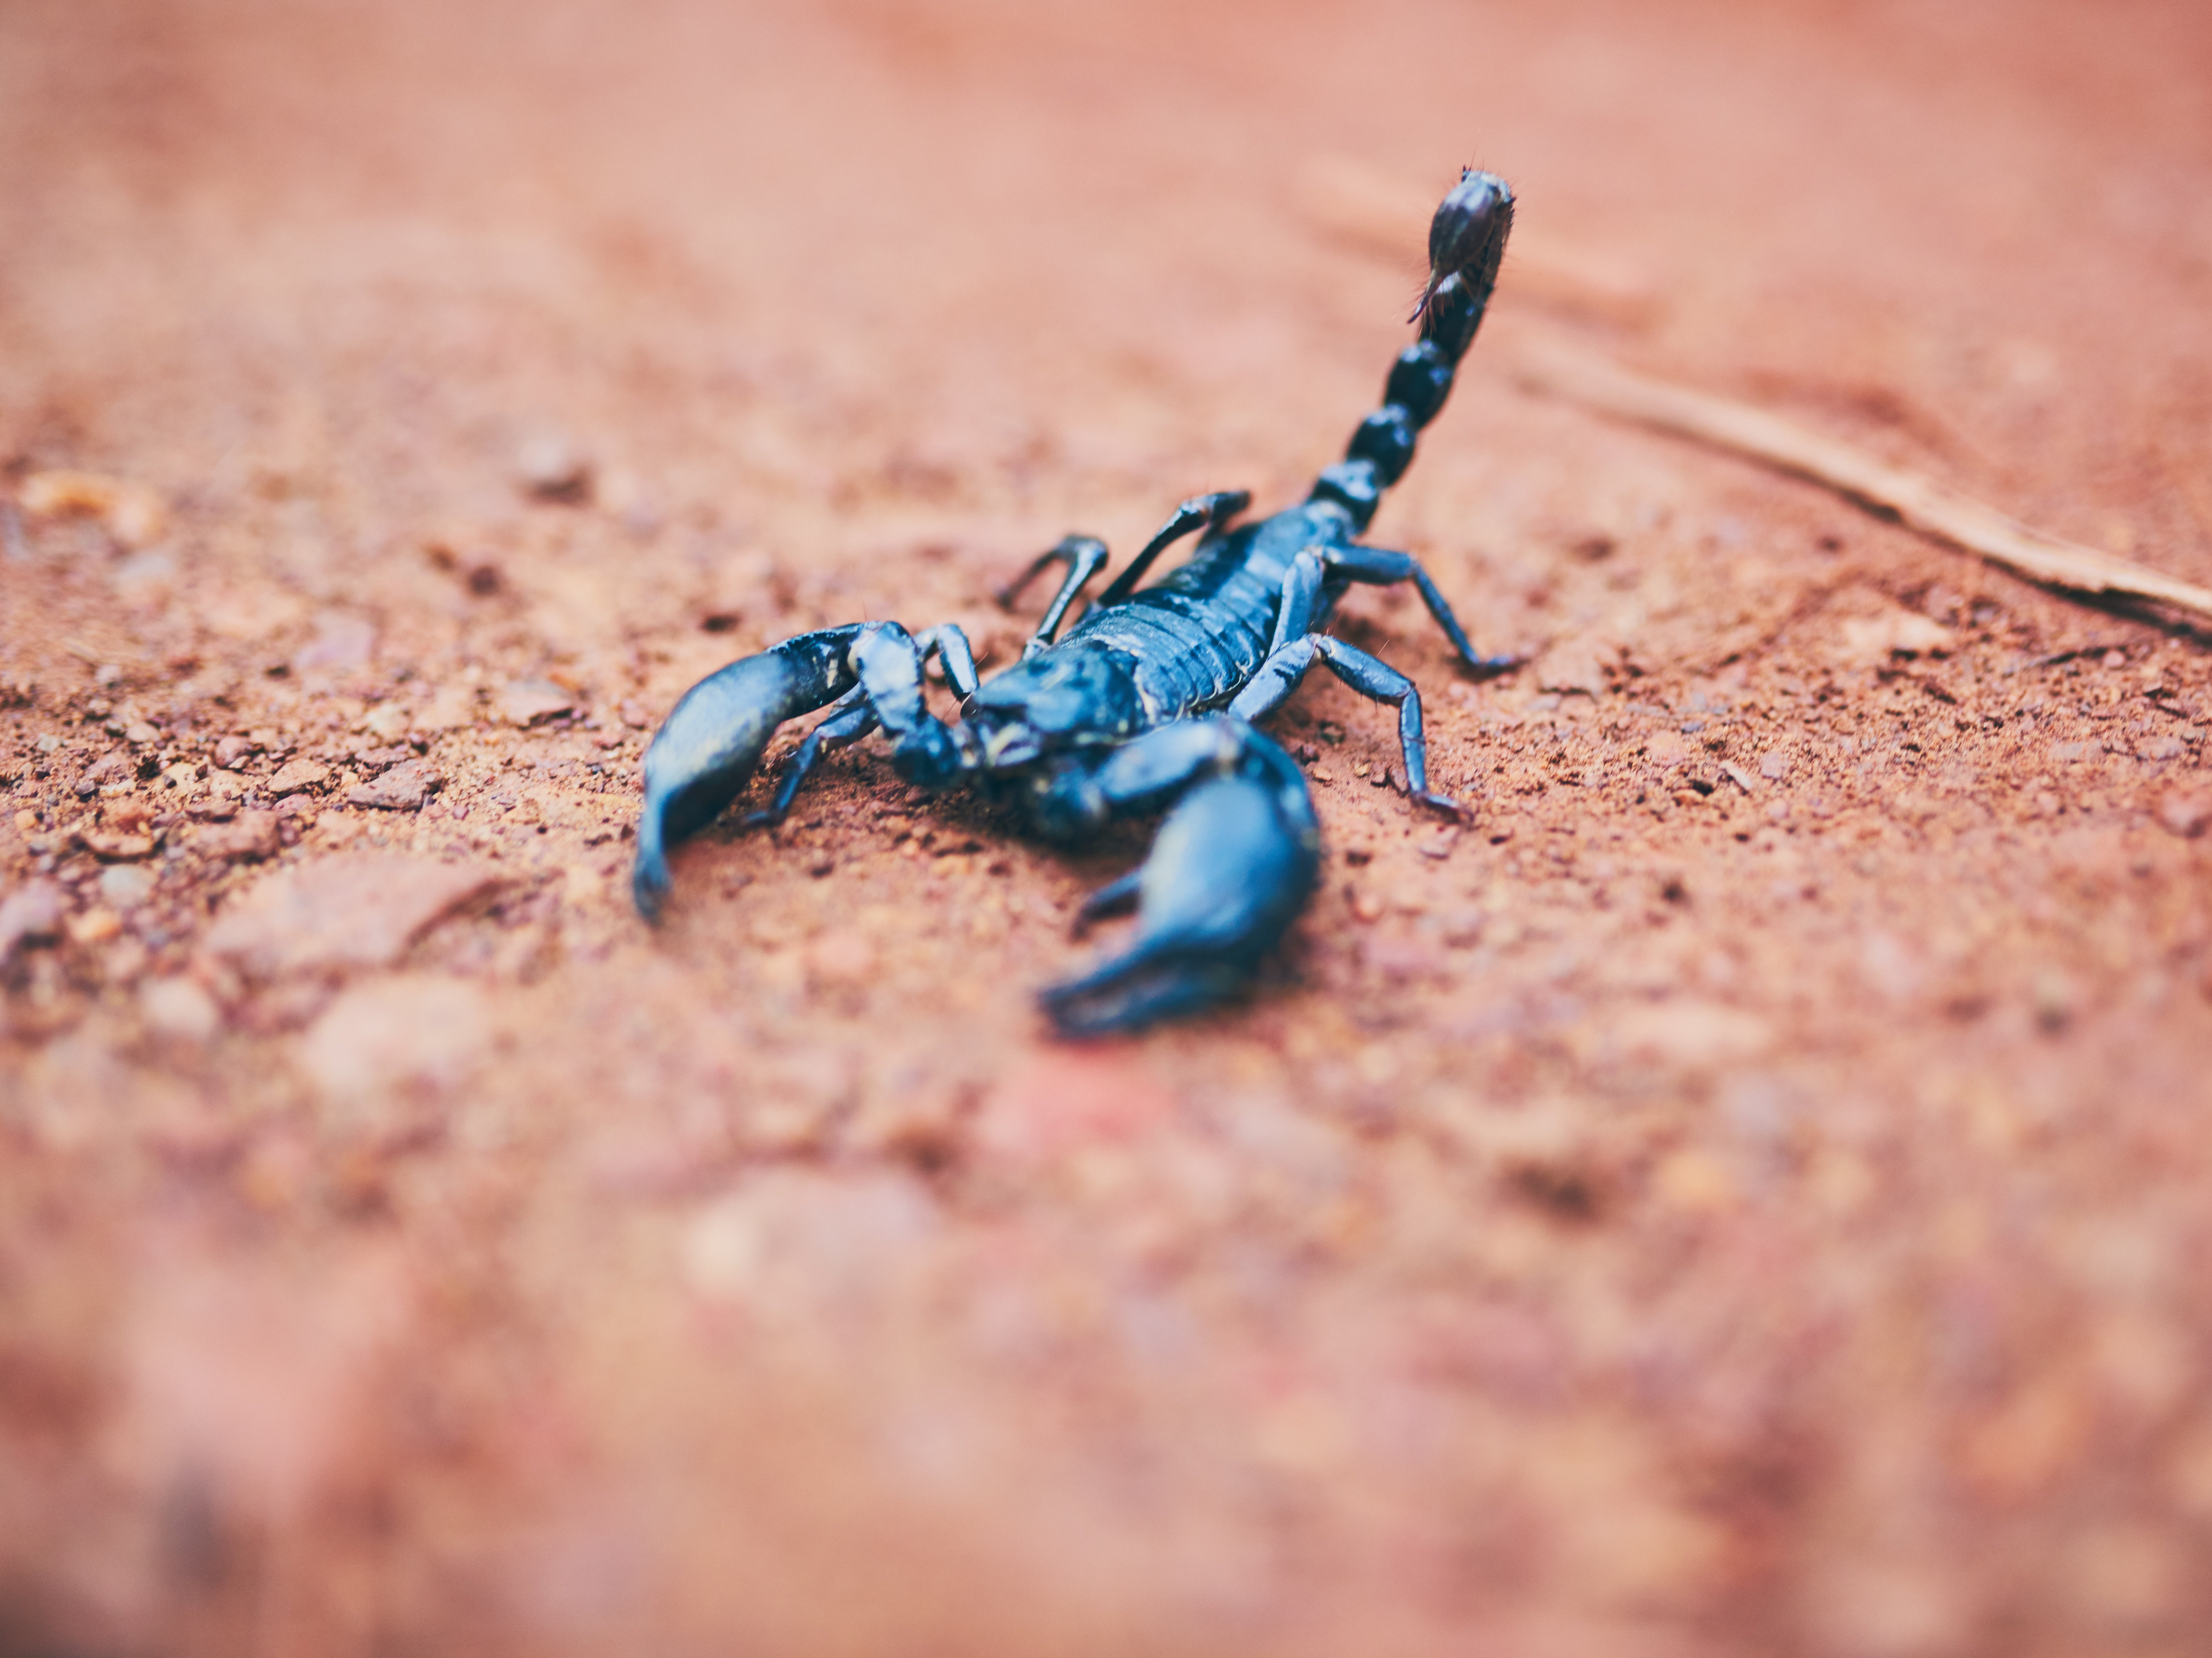 A scorpion was found on a flight in Brazil